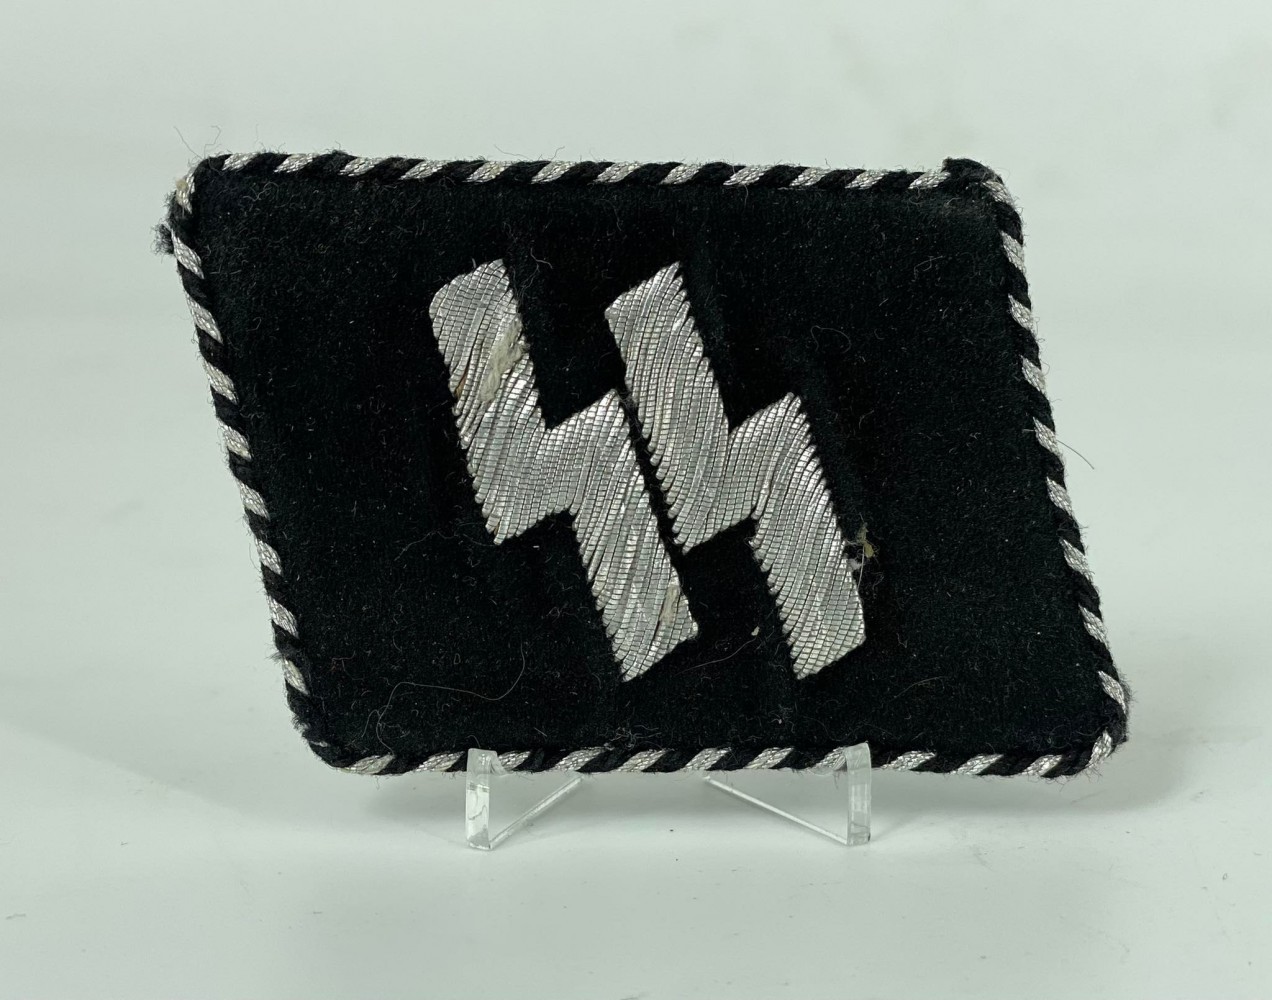 LAH SS/SS-VT EM/NCO Collar Tab - LAH SS/SS-VT EM/NCO Collar Tab: WW2 German Insignia